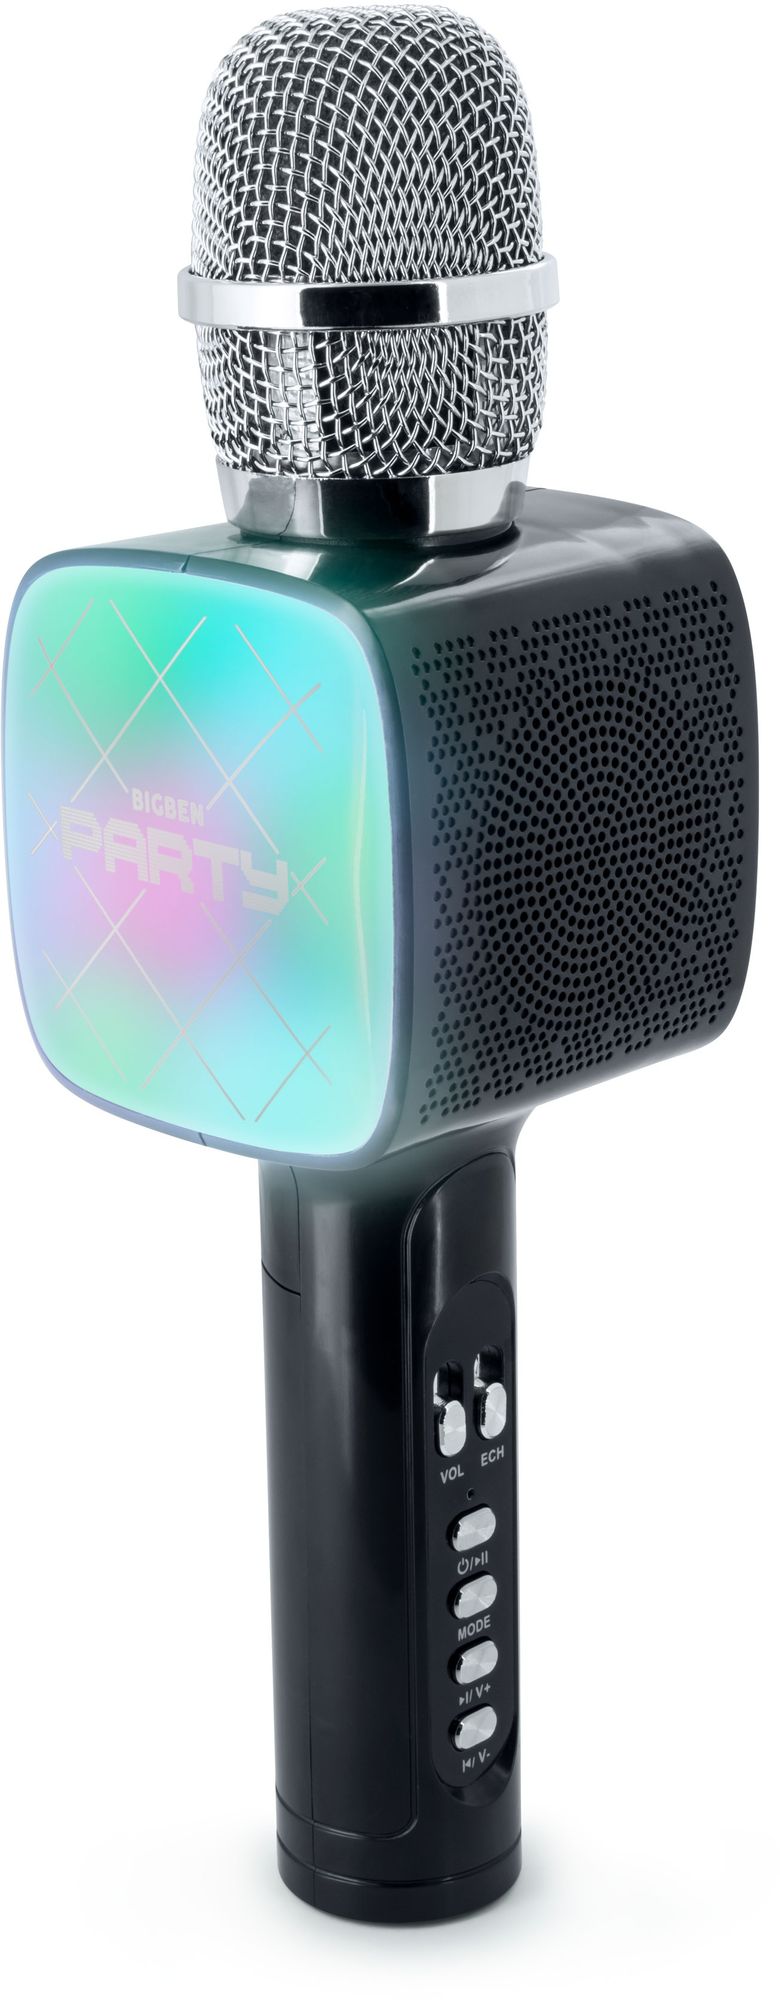 Bigben - PARTY BTMIC - Wireless Microphone + Speaker with Light Effects -  black online bestellen